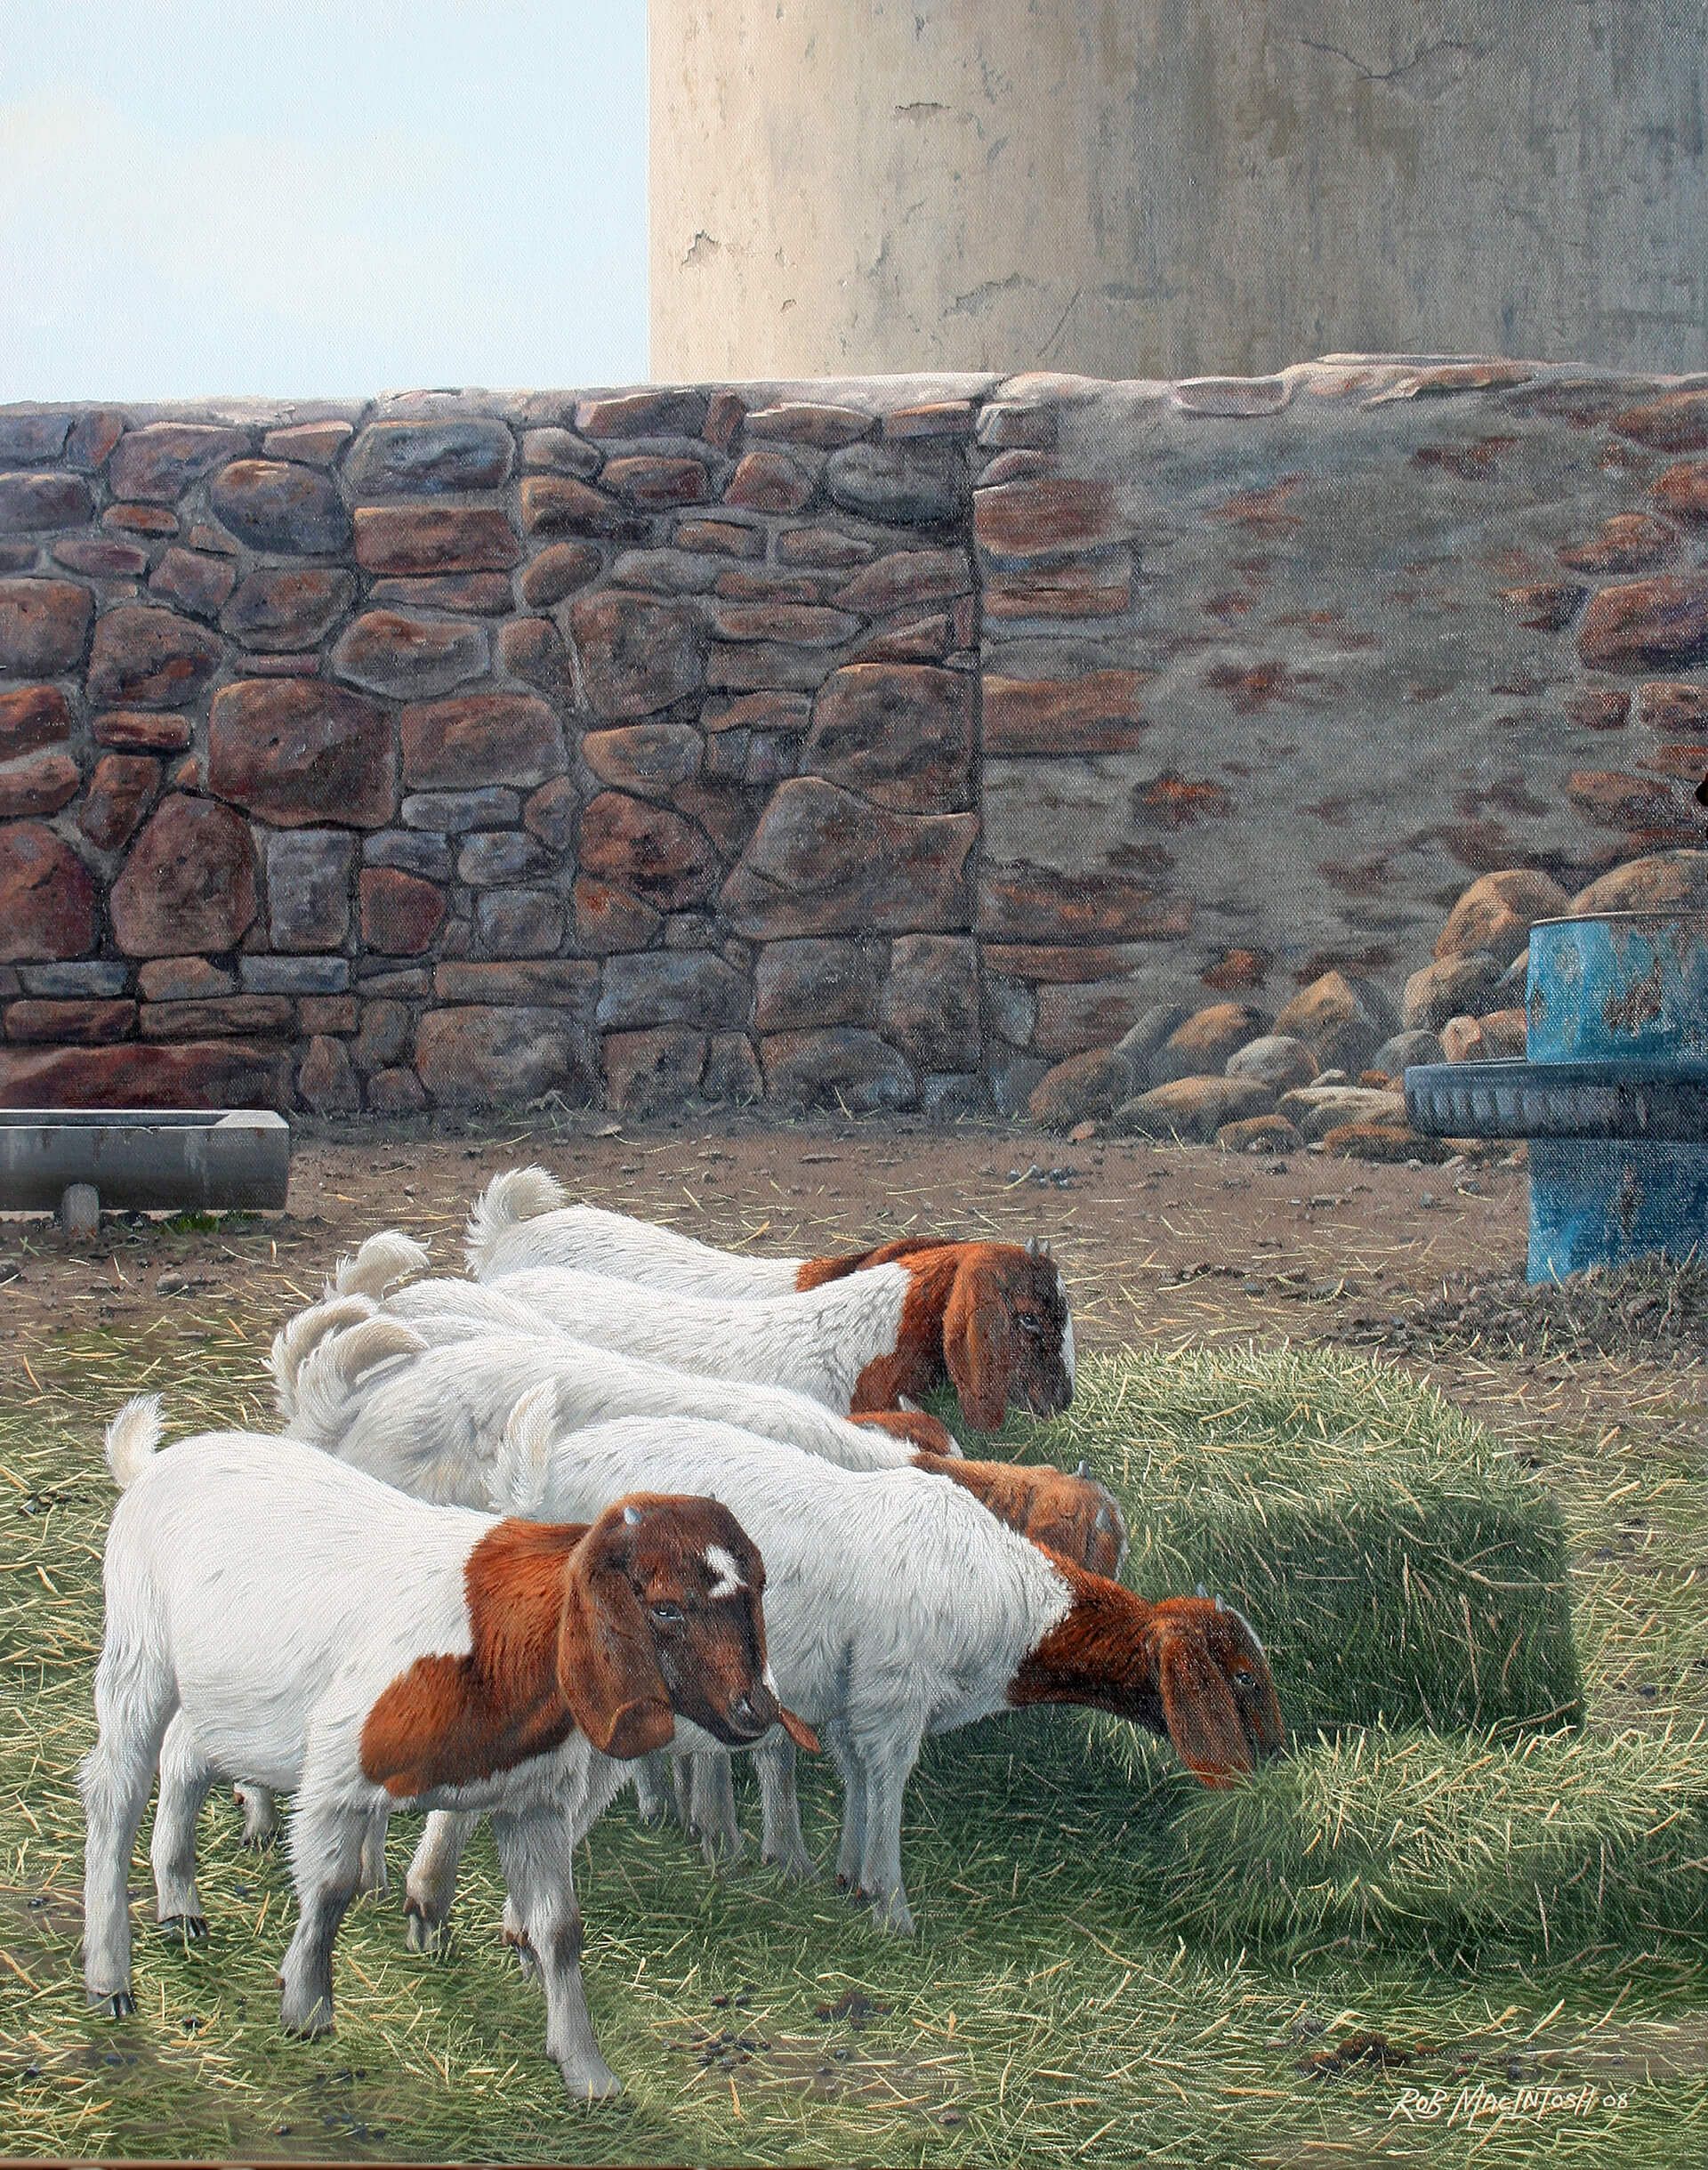 Photorealistic painting of goats feeding